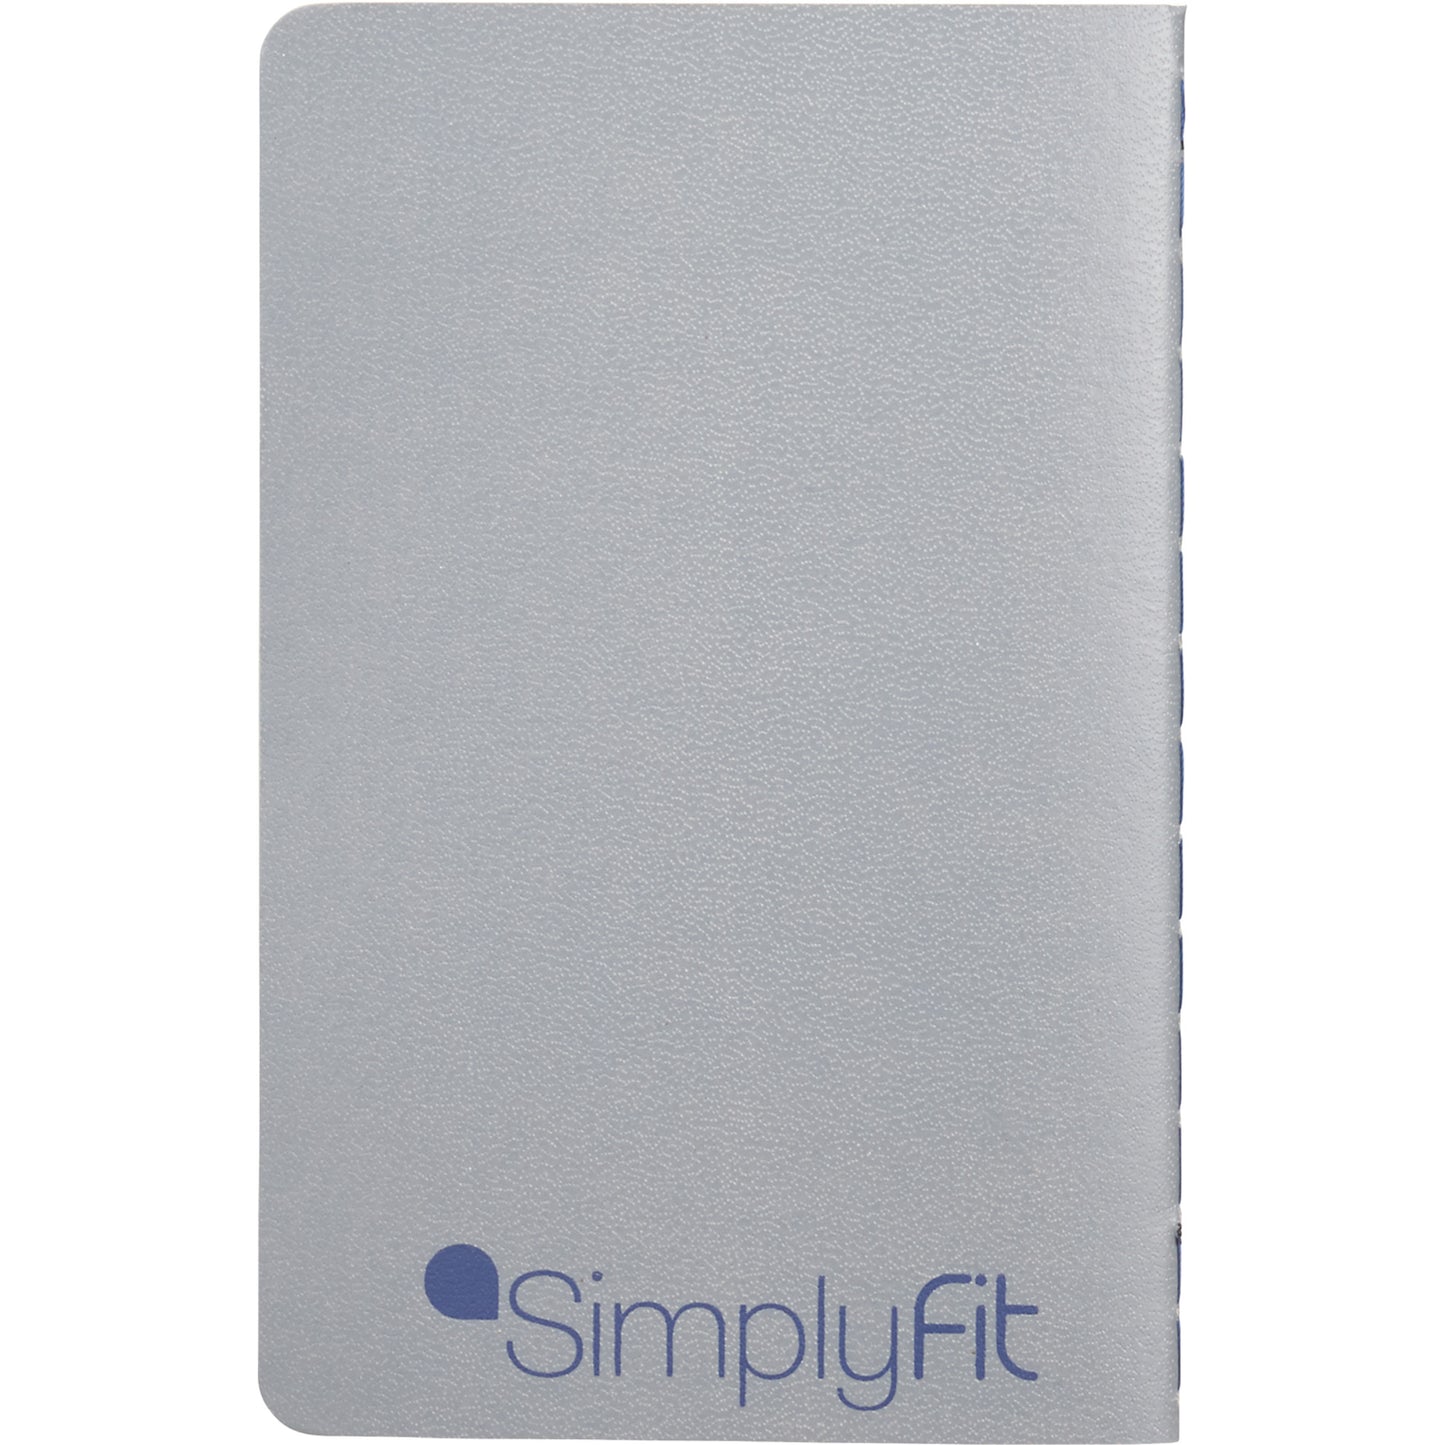 SimplyFit Fitness Jotter 5"x2.5"